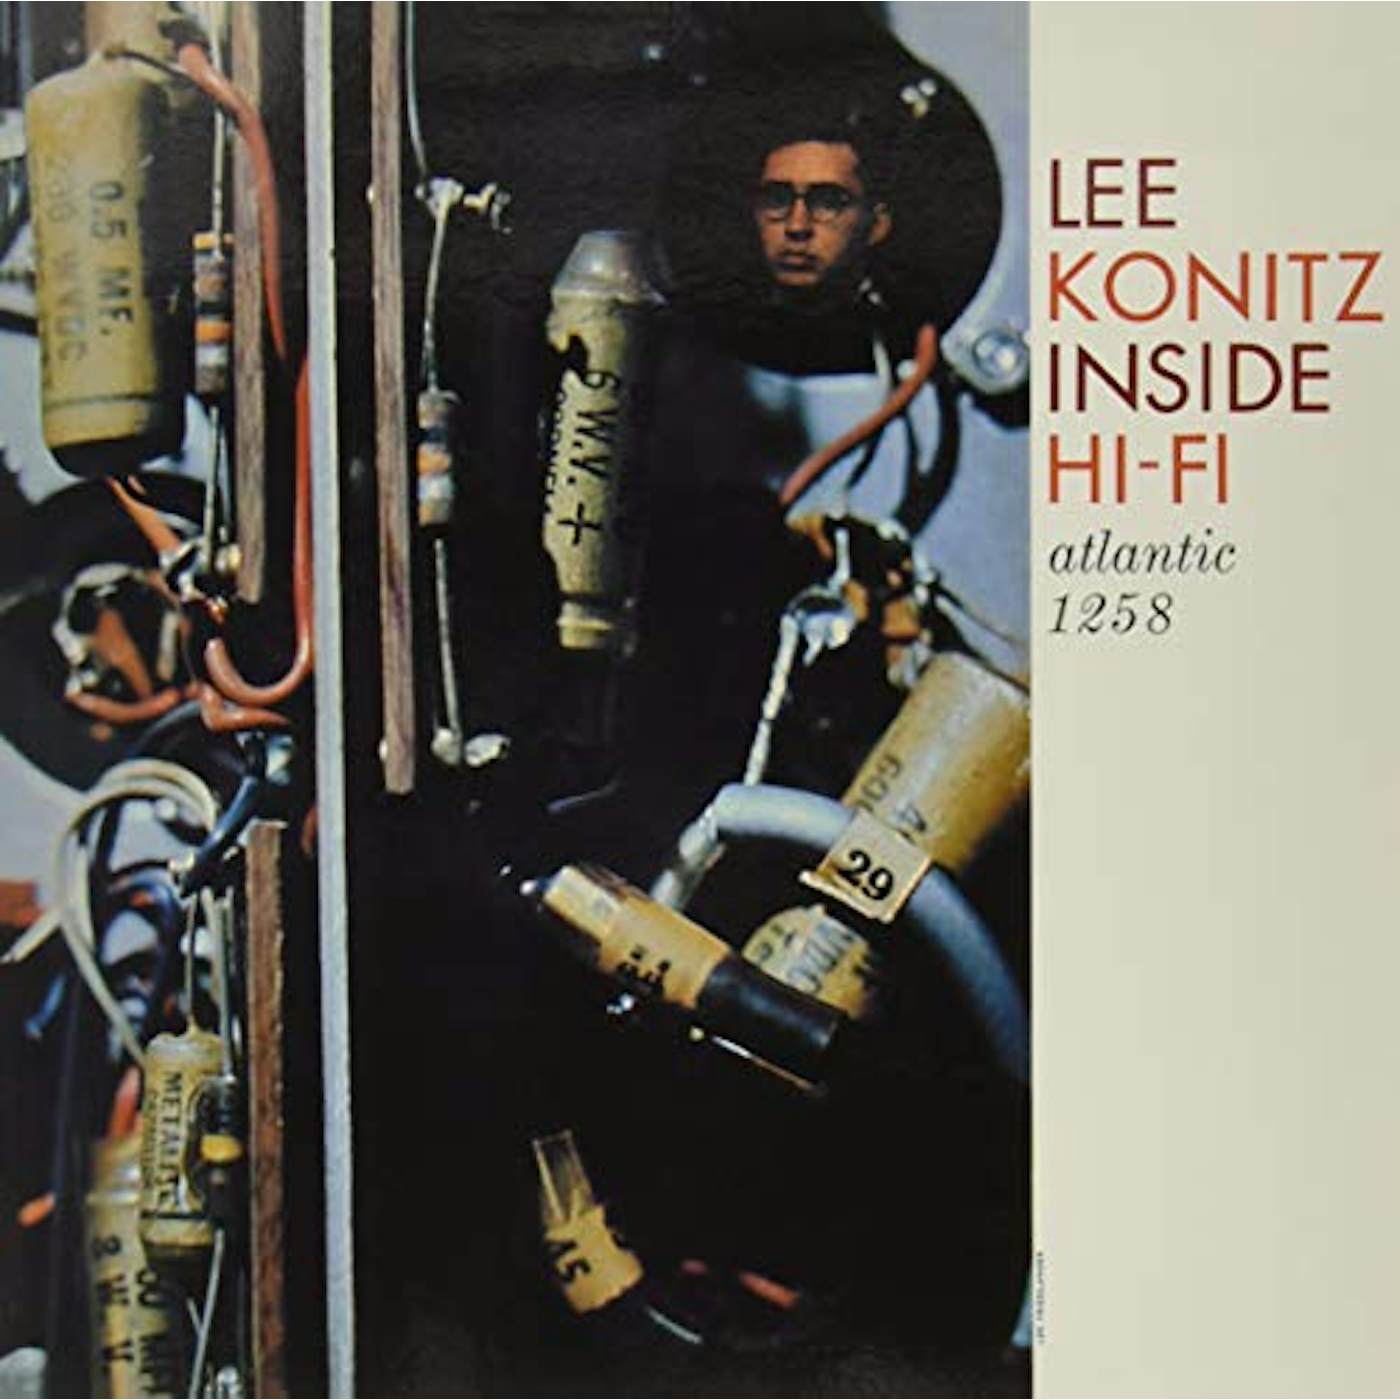 Lee Konitz INSIDE HI-FI (LIMITED) Vinyl Record